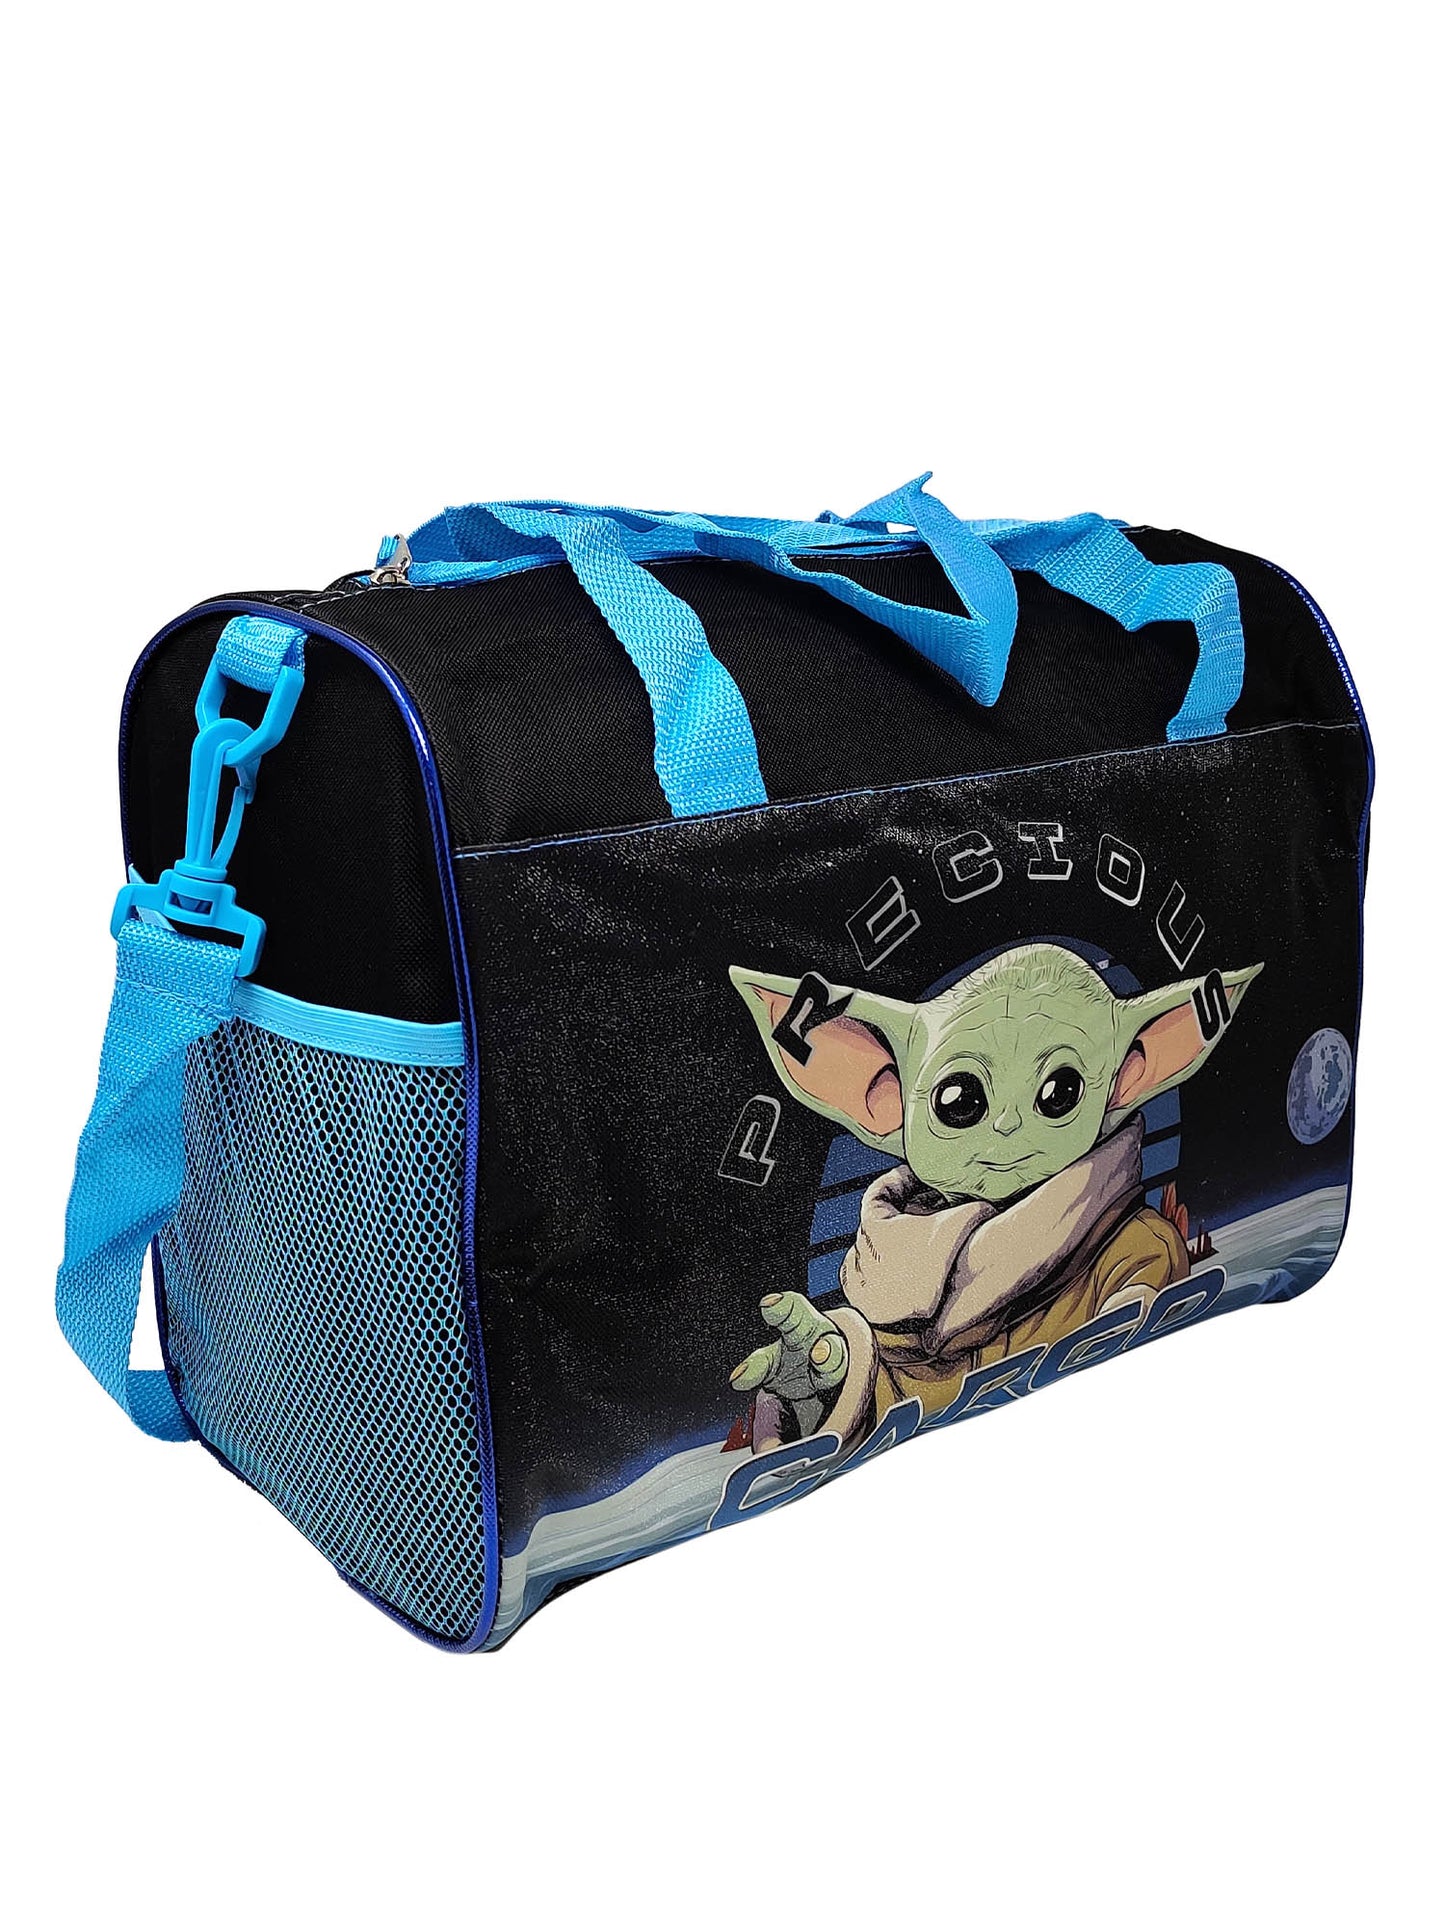 Star Wars Duffel Bag Mandalorian Baby Yoda Carry-On "Precious Cargo" Grogu